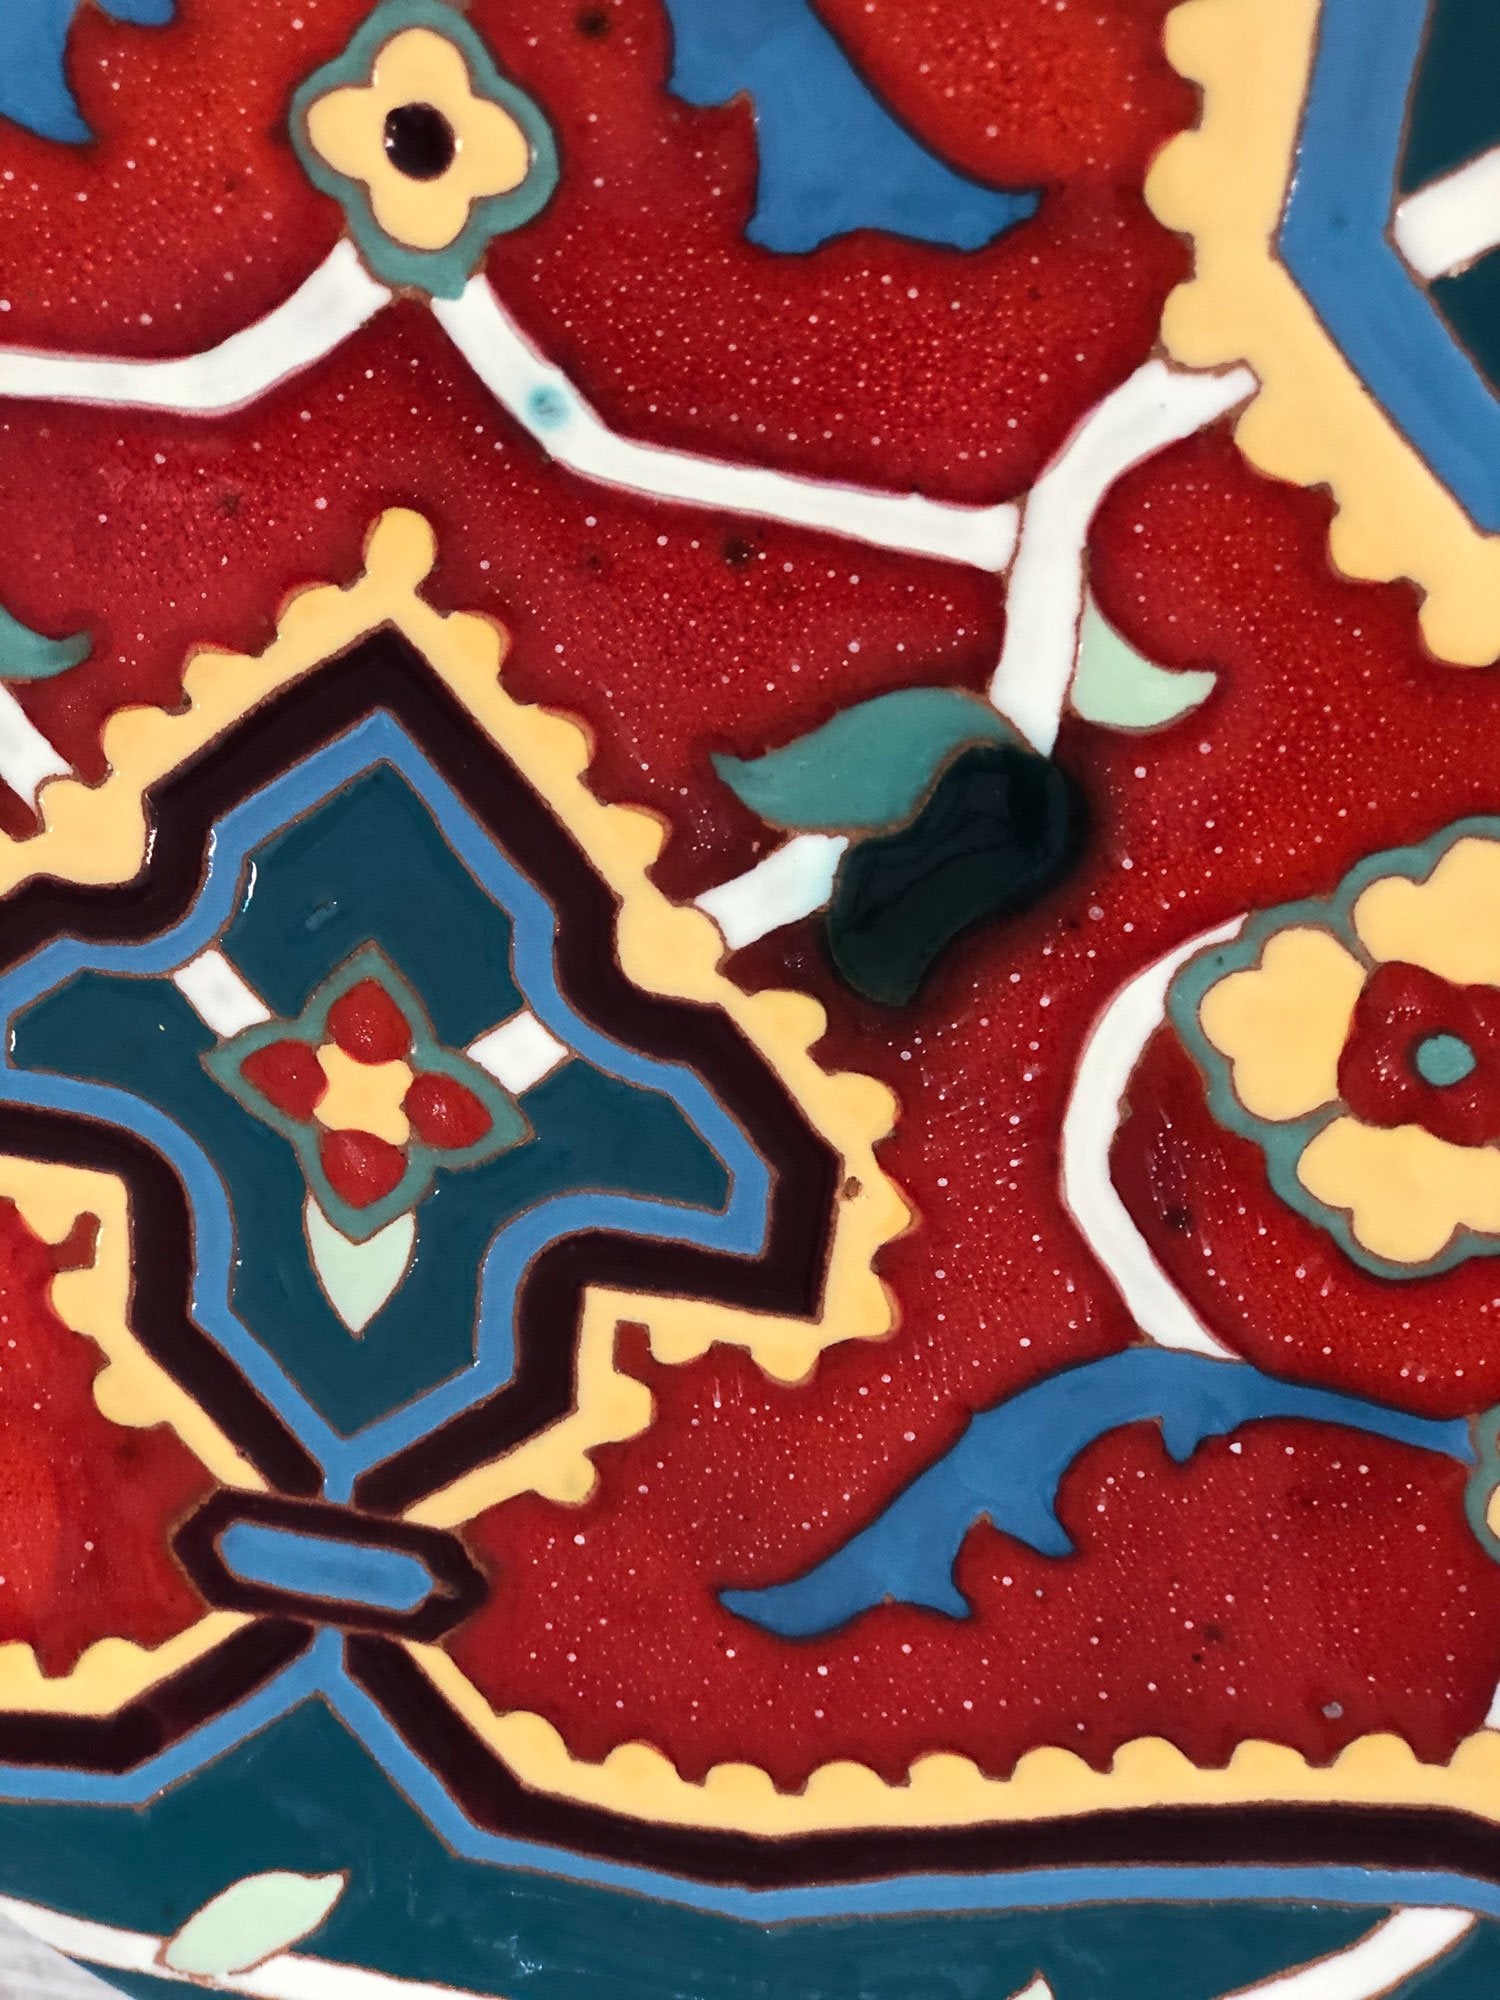 Mane Tiles Ceramic Plate with Armenian Carpet Ornaments